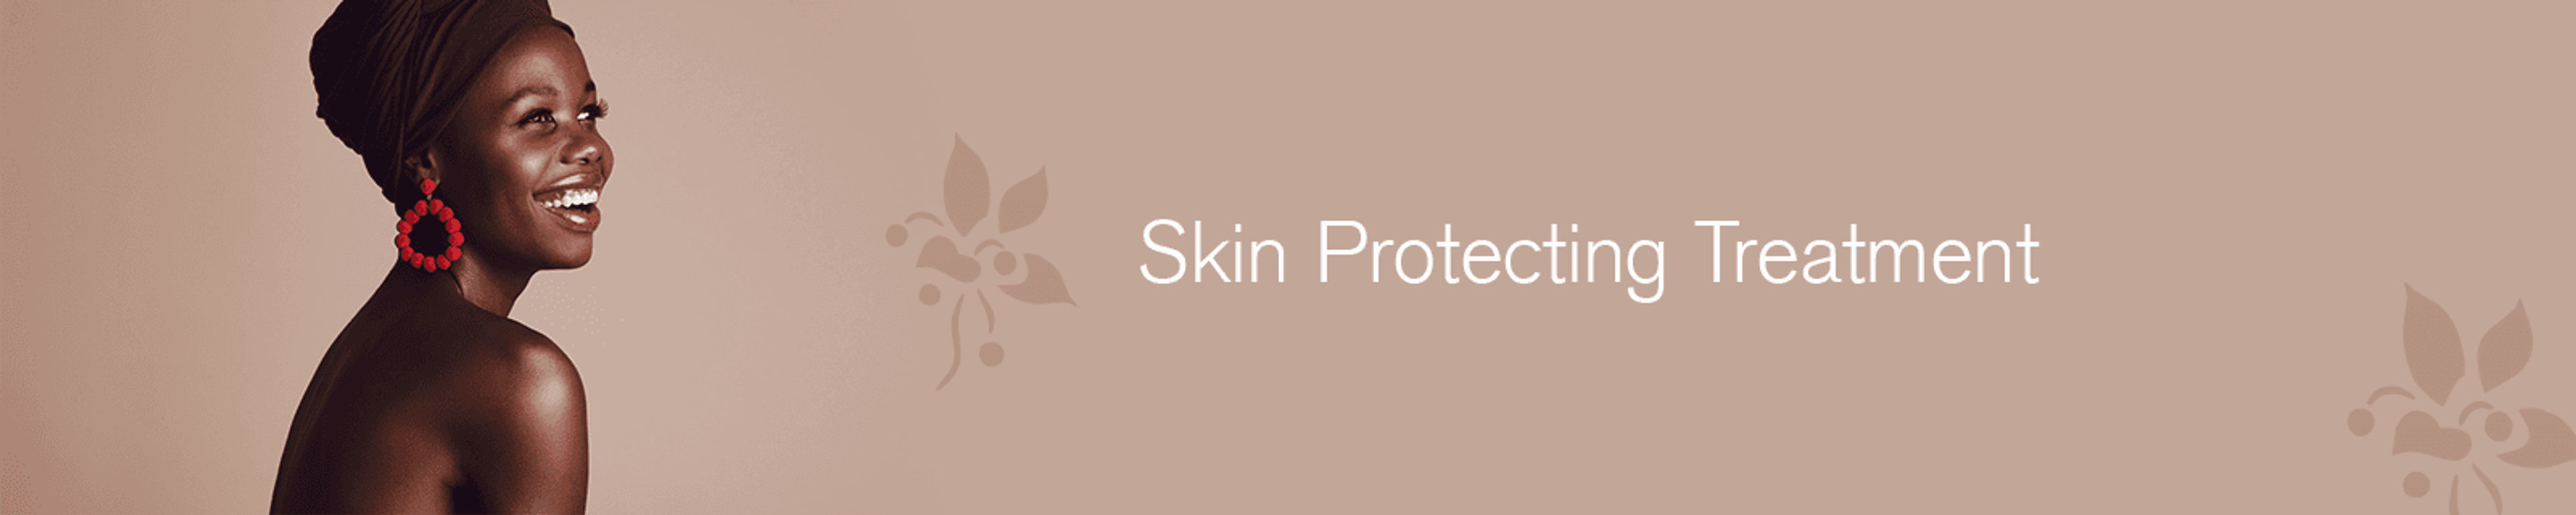 Skin Protecting Treatment